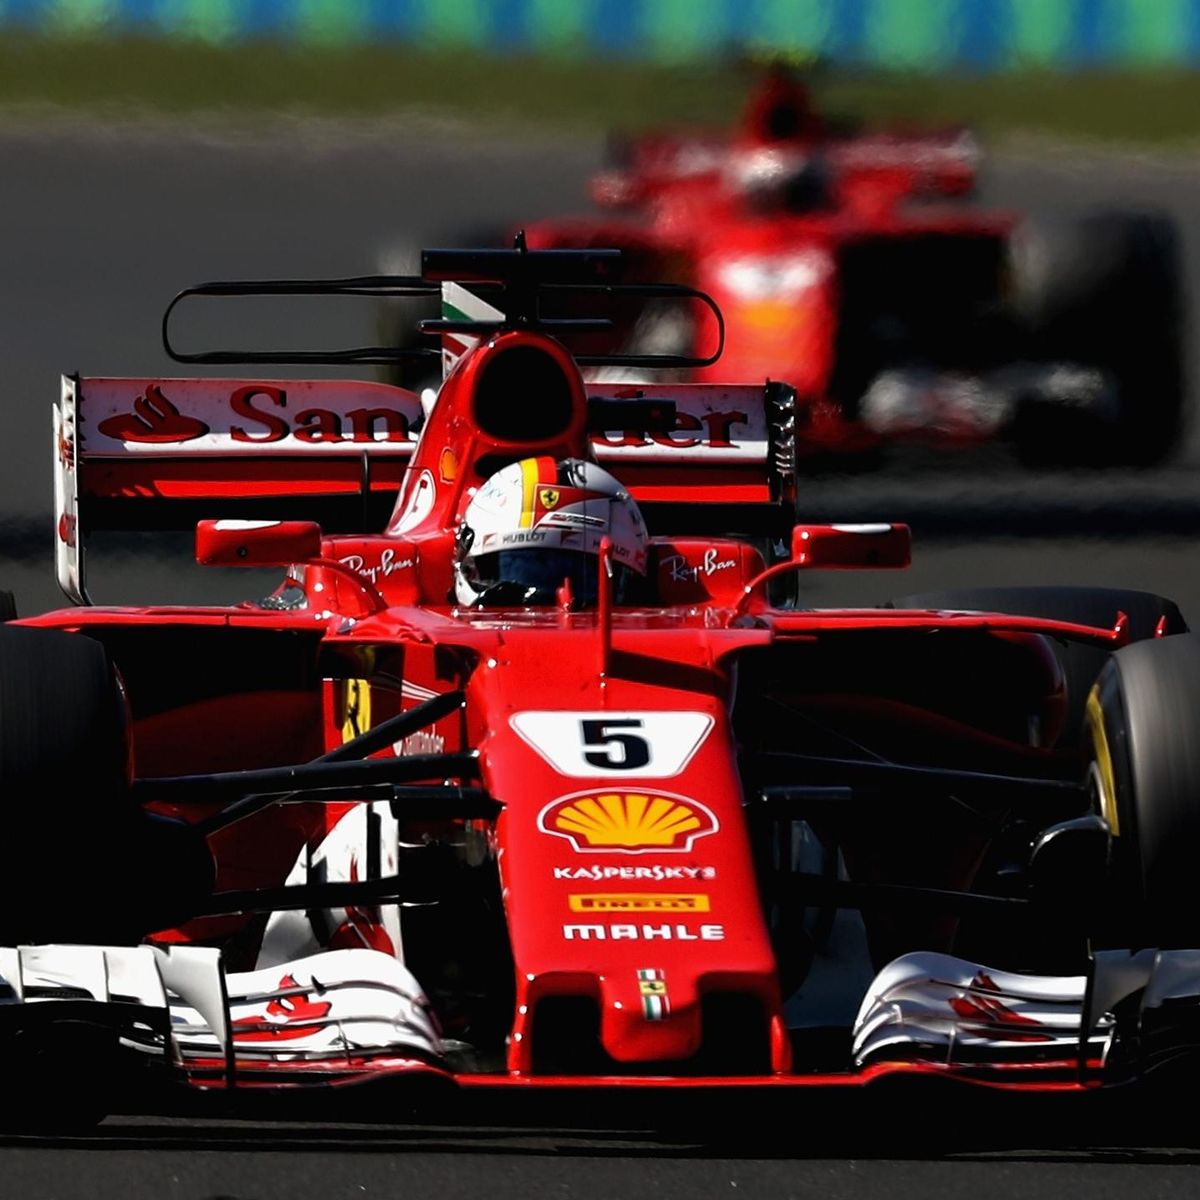 Vergevingsgezind Streng Geboorte geven Sebastian Vettel wins in Hungary amid team orders controversy - Eurosport